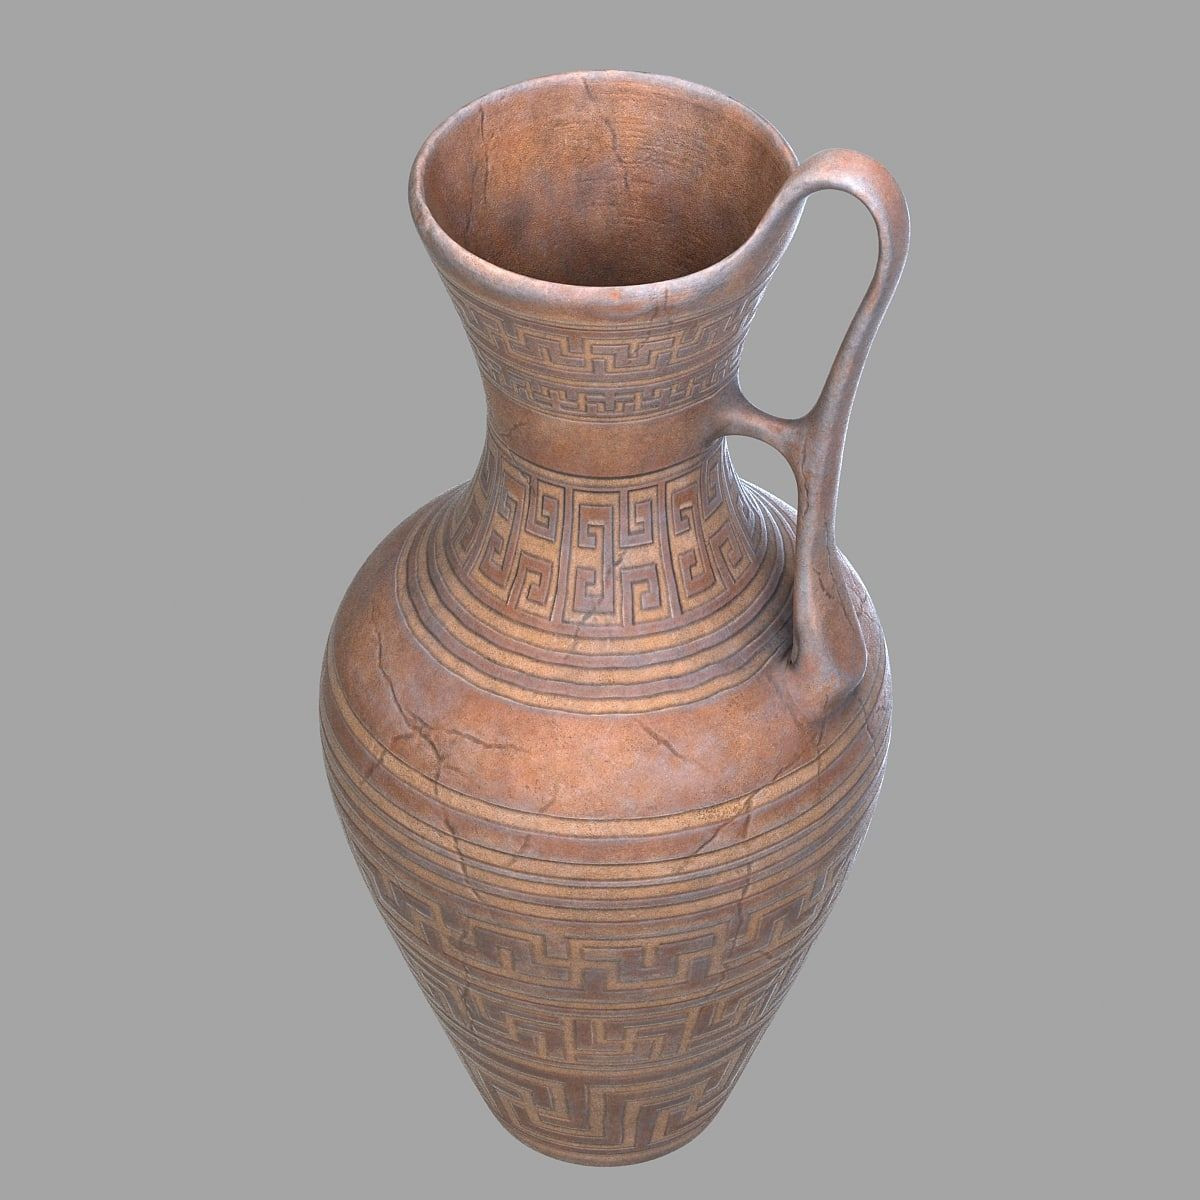 24 Fabulous Hall Pottery Vase 2024 free download hall pottery vase of jug max 3d model 3d modeling pinterest 3d within jug max 3d model ac2b7 vase